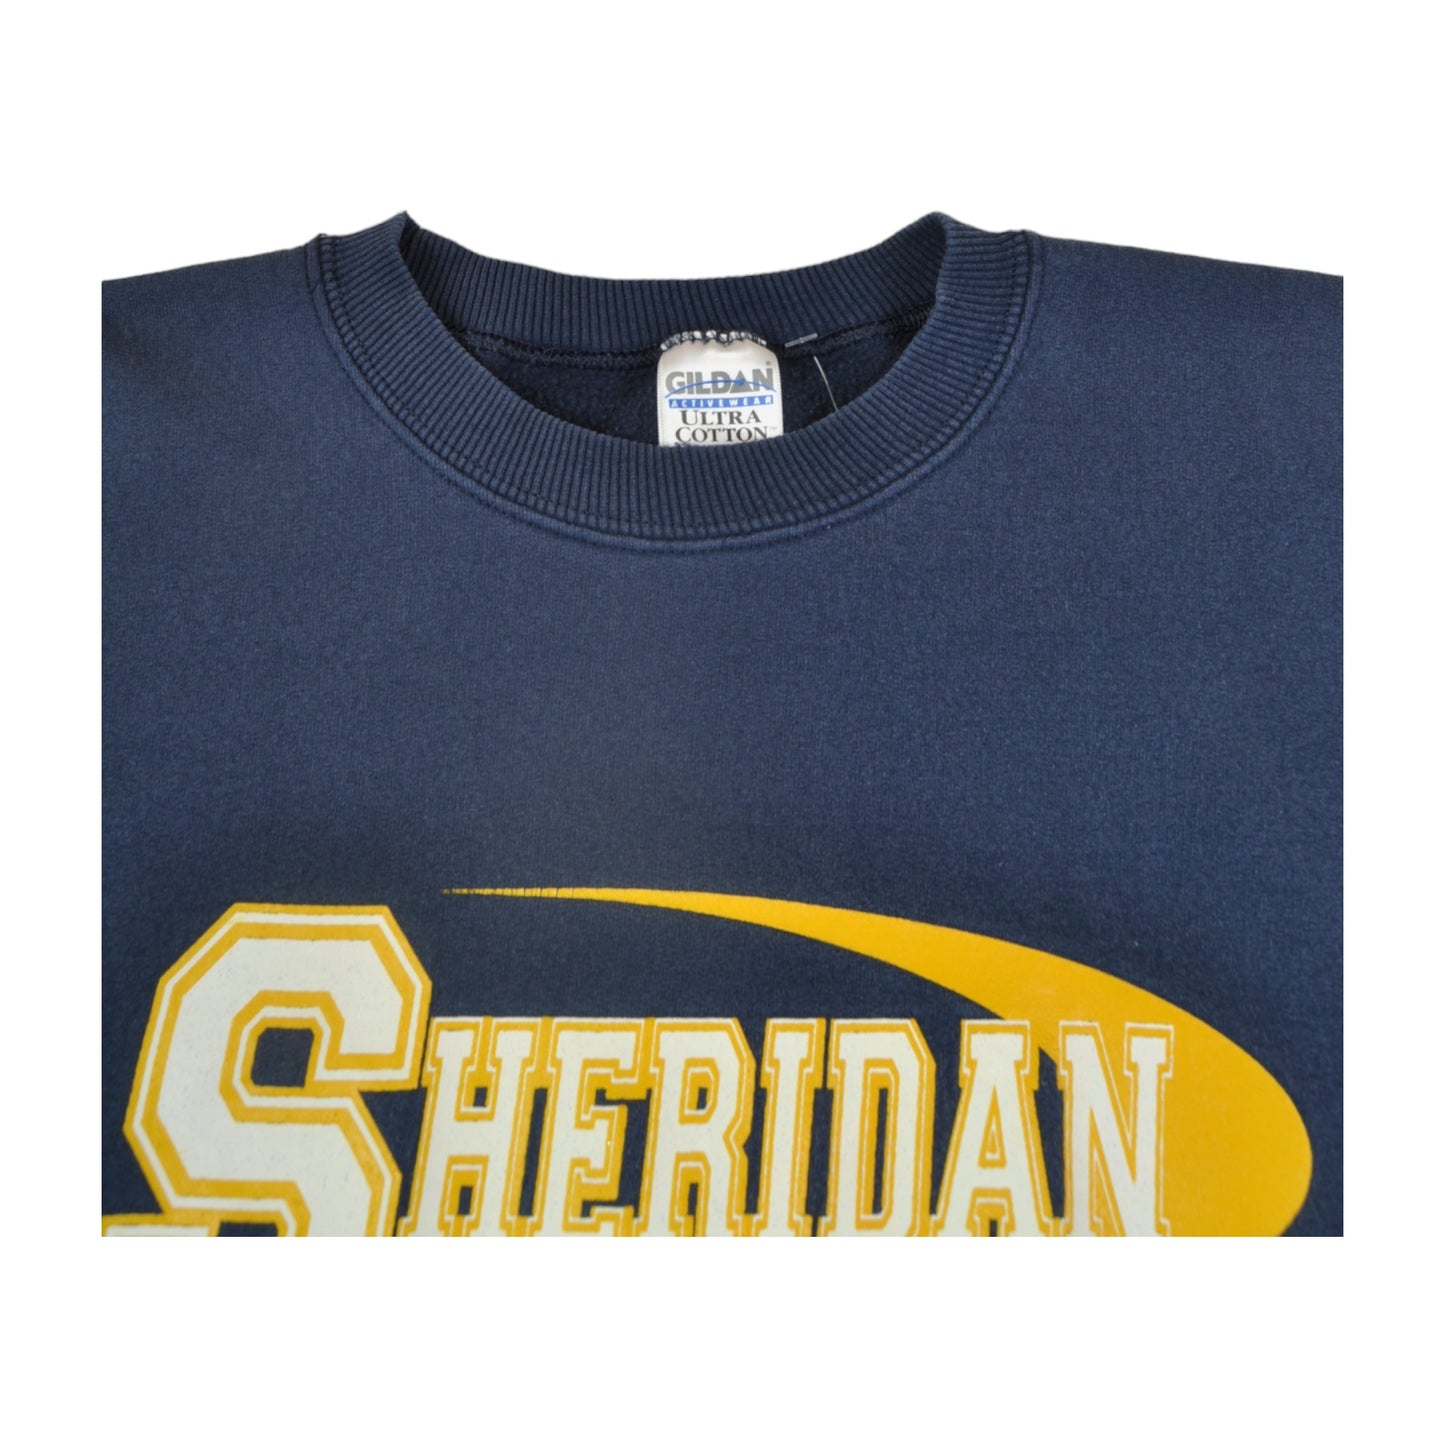 Vintage Sheridan High School Sweatshirt Navy Large